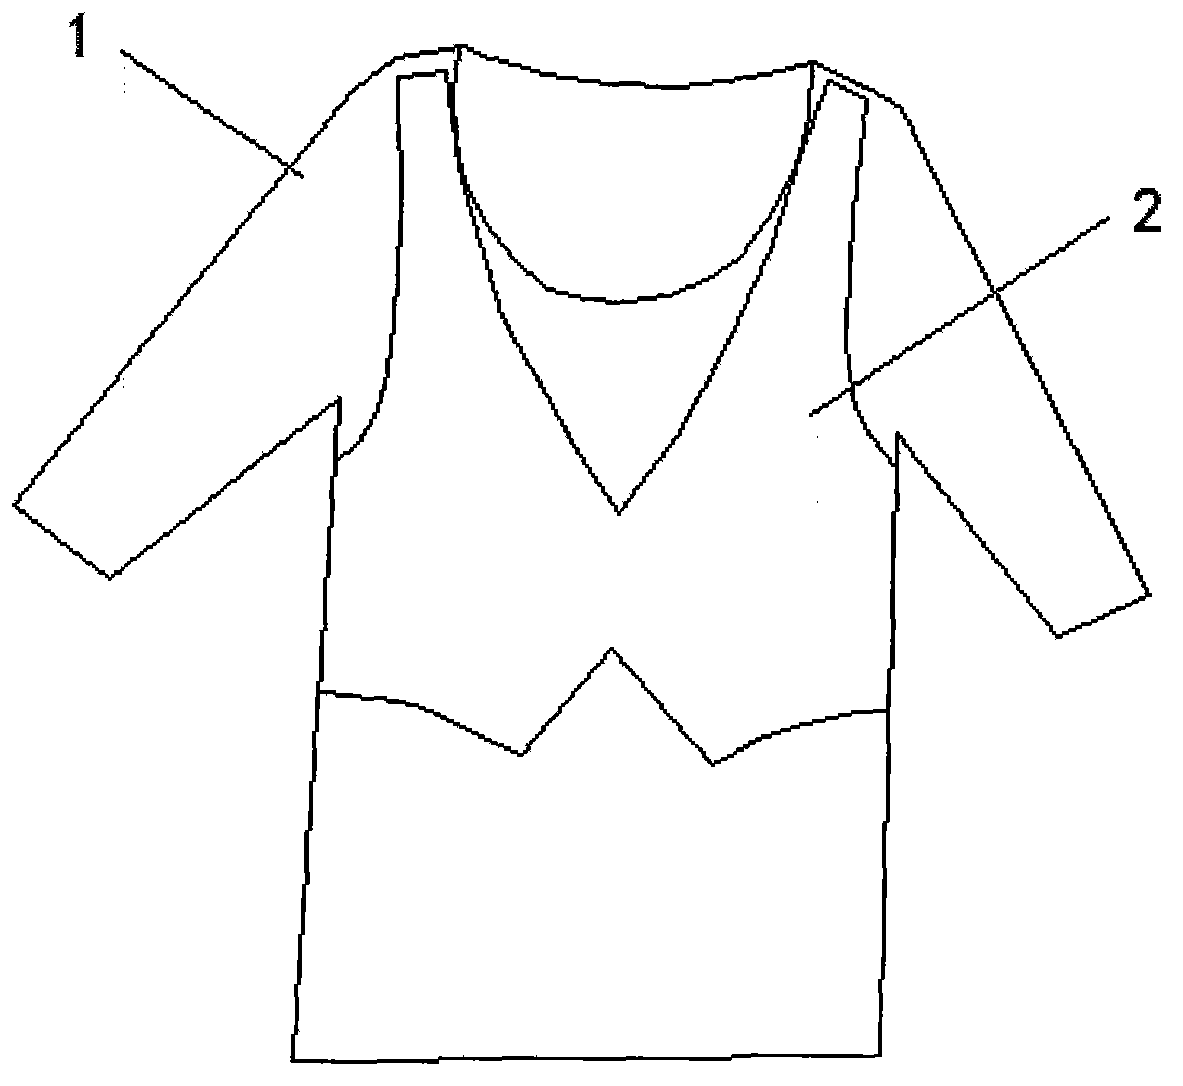 Fabric structure reinforced waistcoat-shaped garment